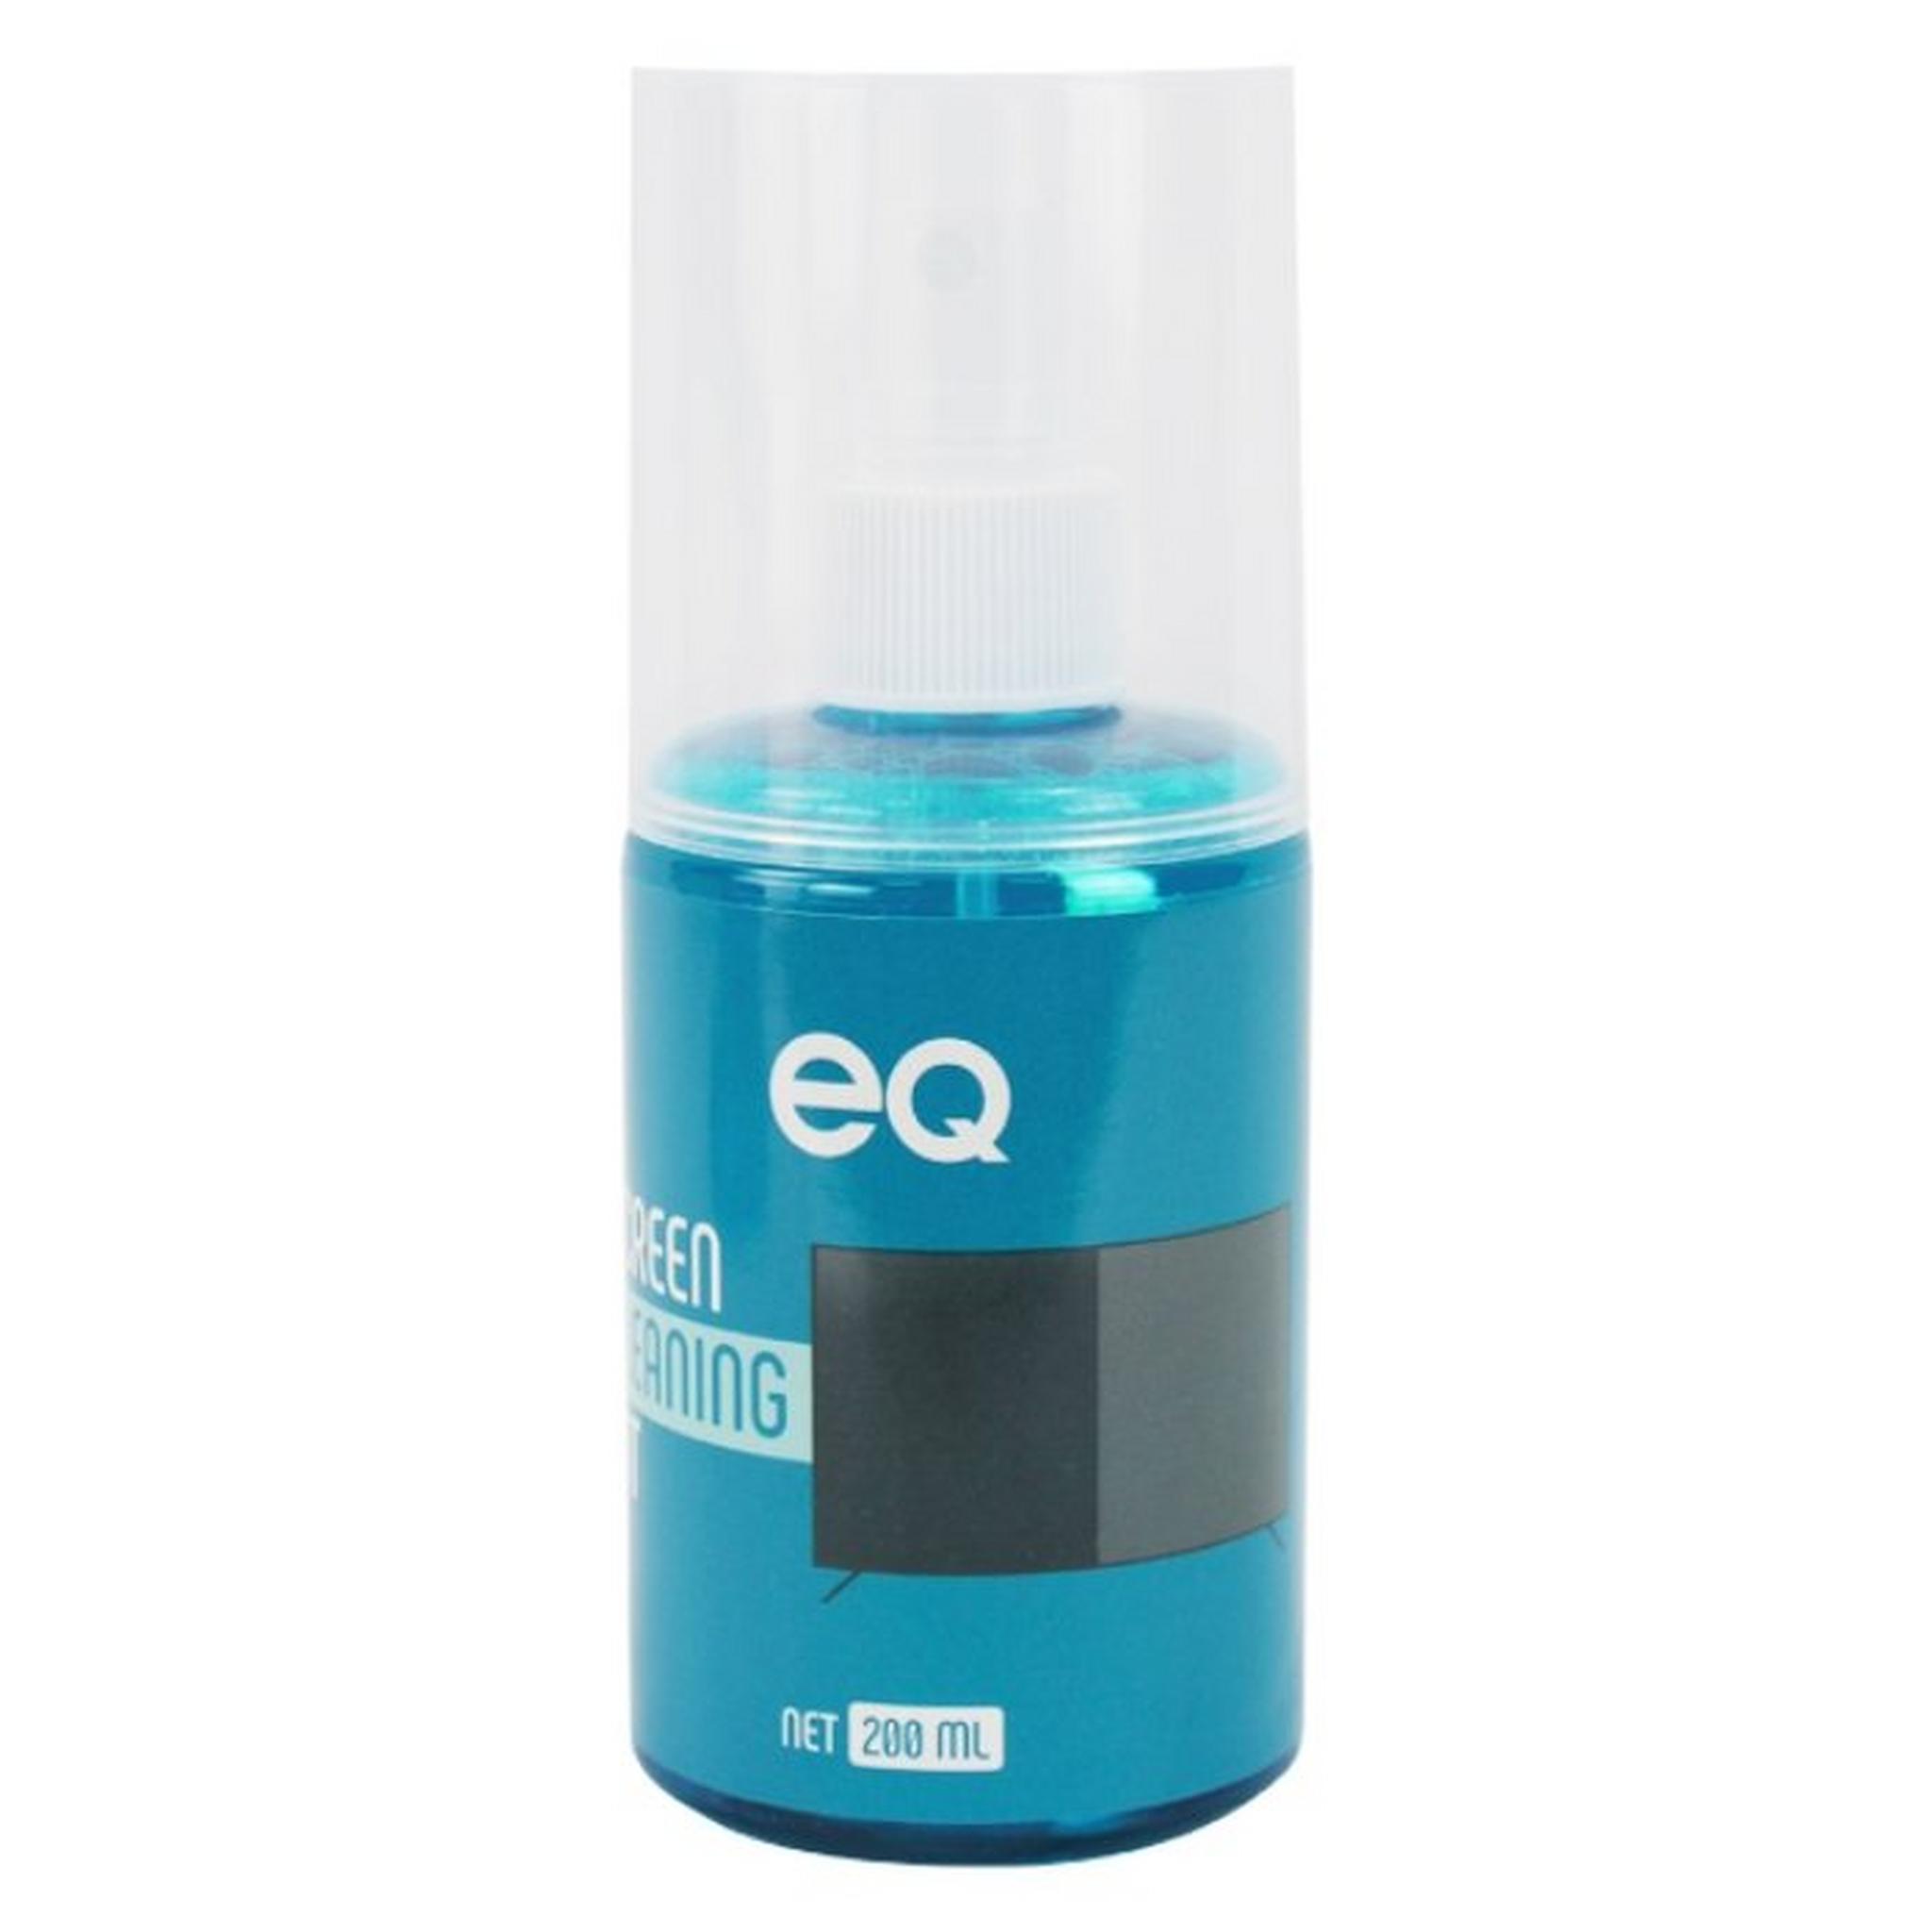 EQ Screen Spray Cleaning Kit.